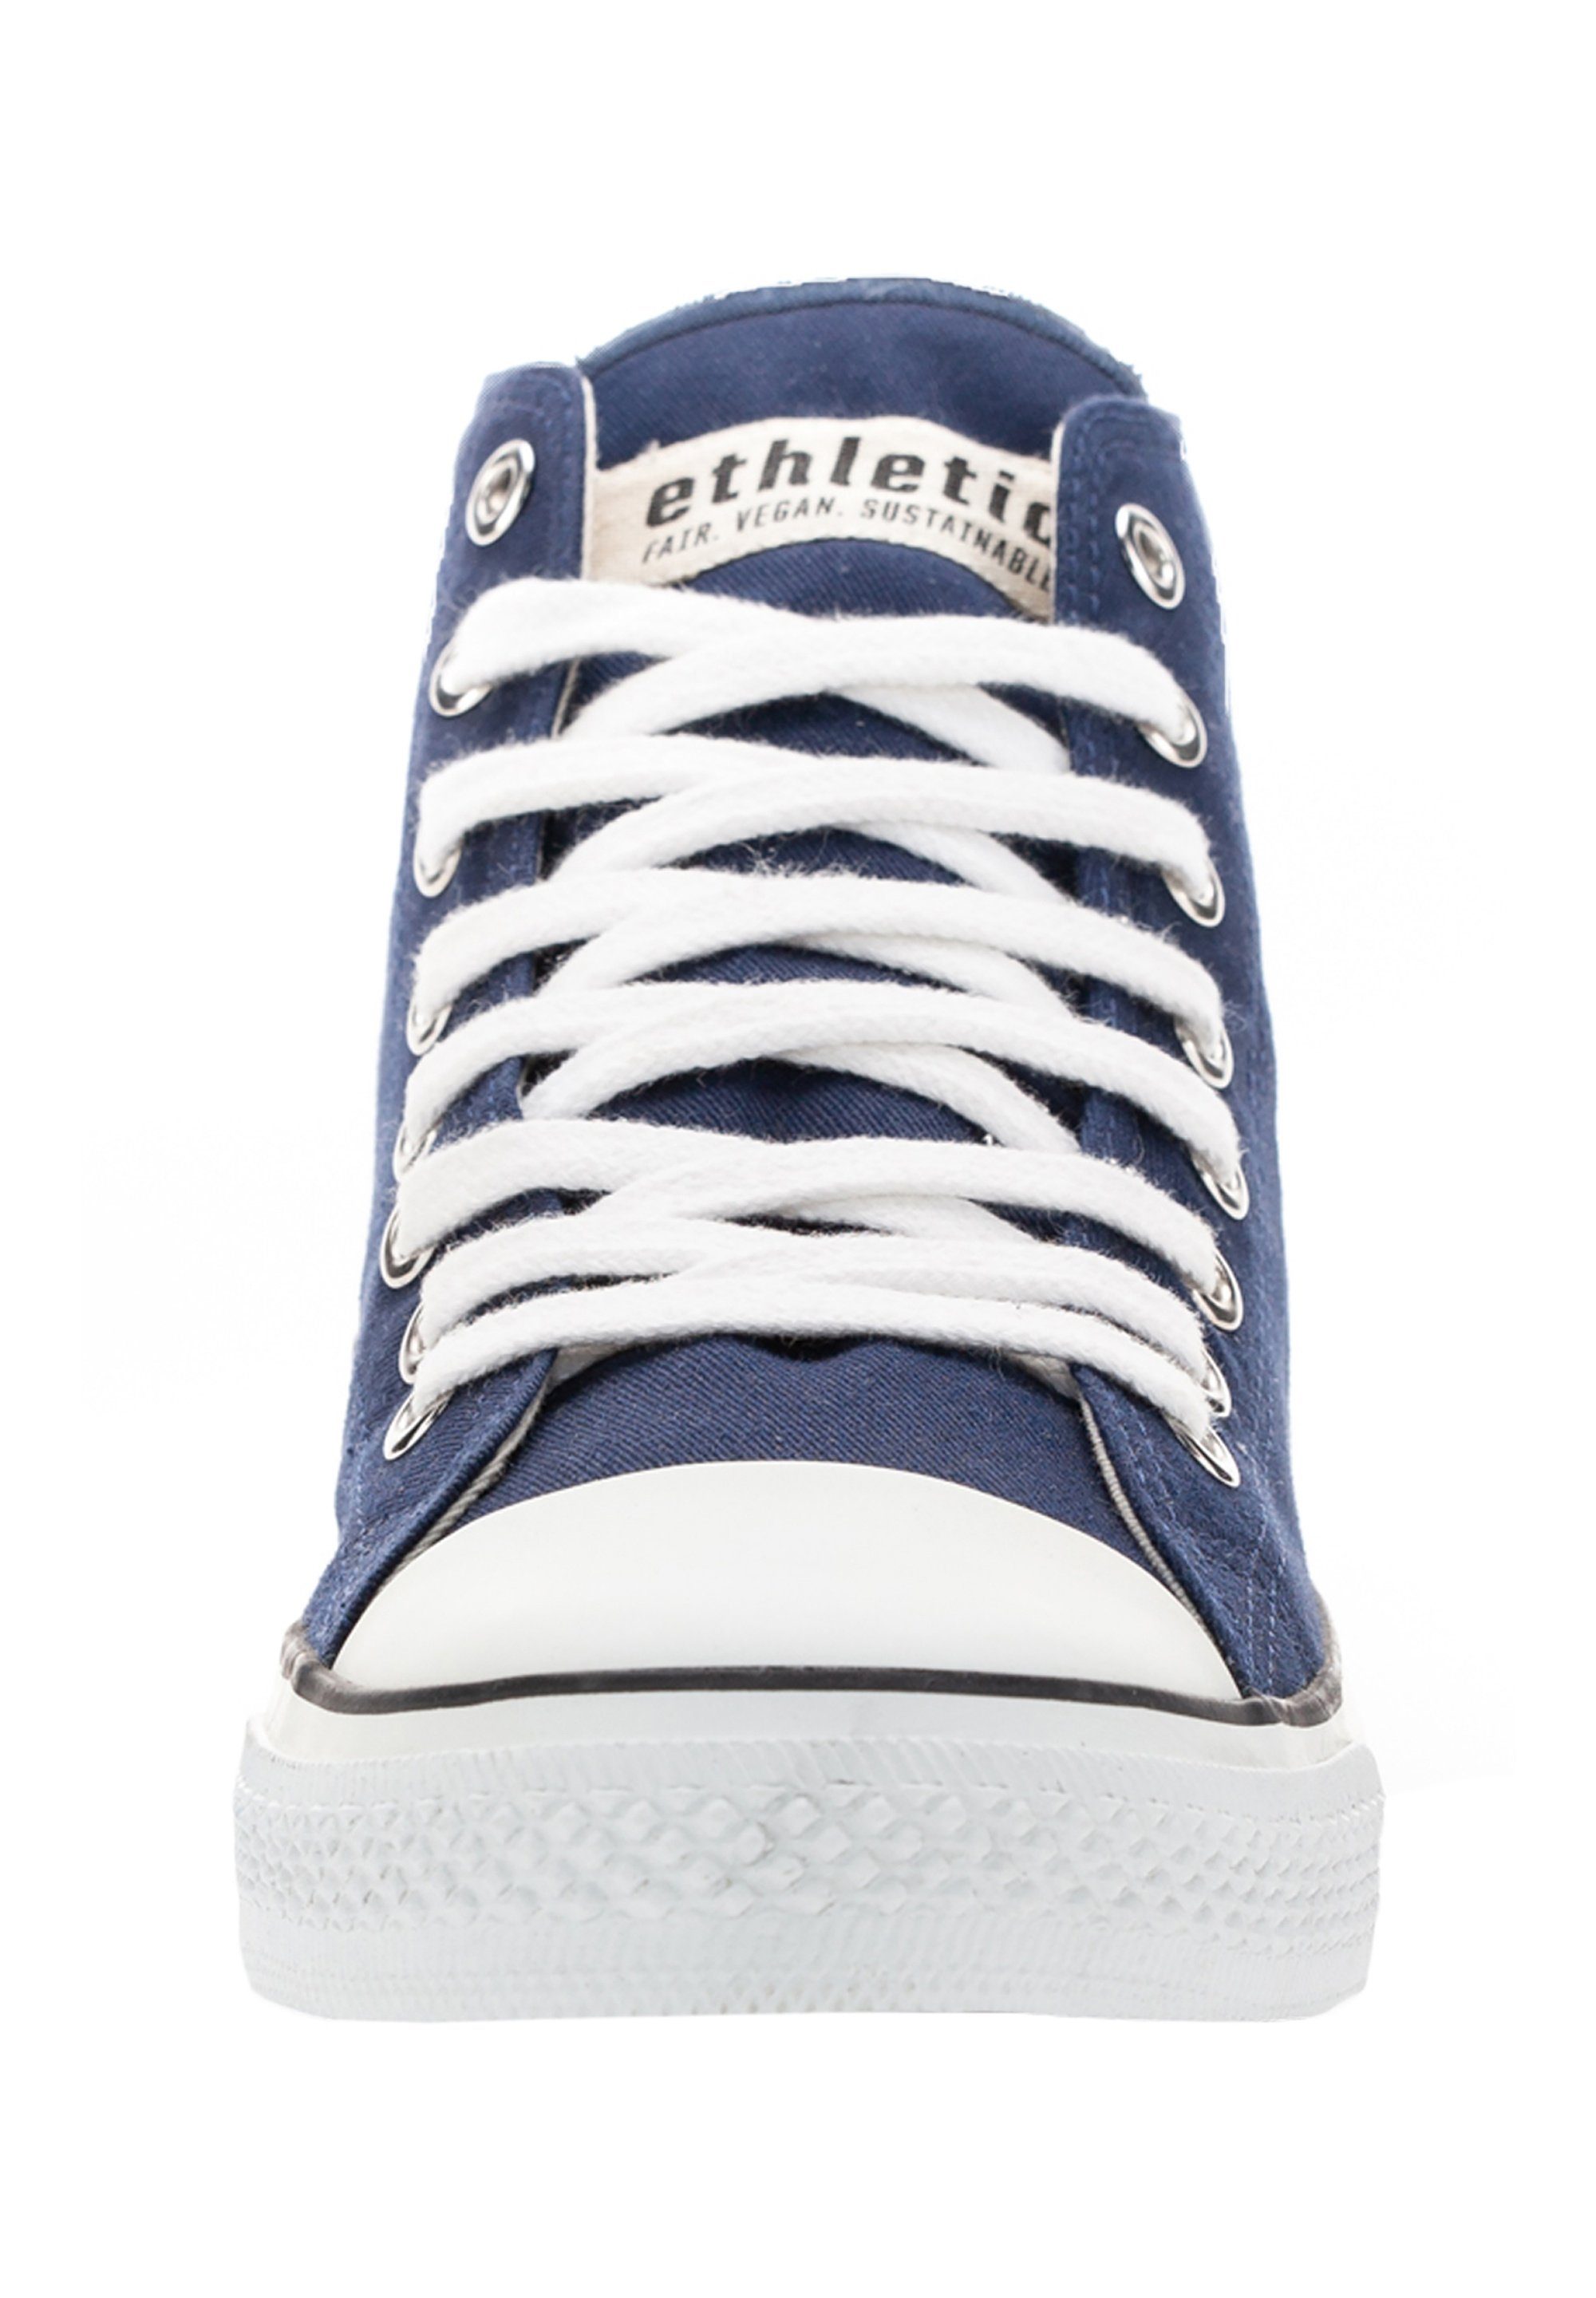 Sneaker Cut Fairtrade ocean White white blue ETHLETIC Hi Cap Produkt just